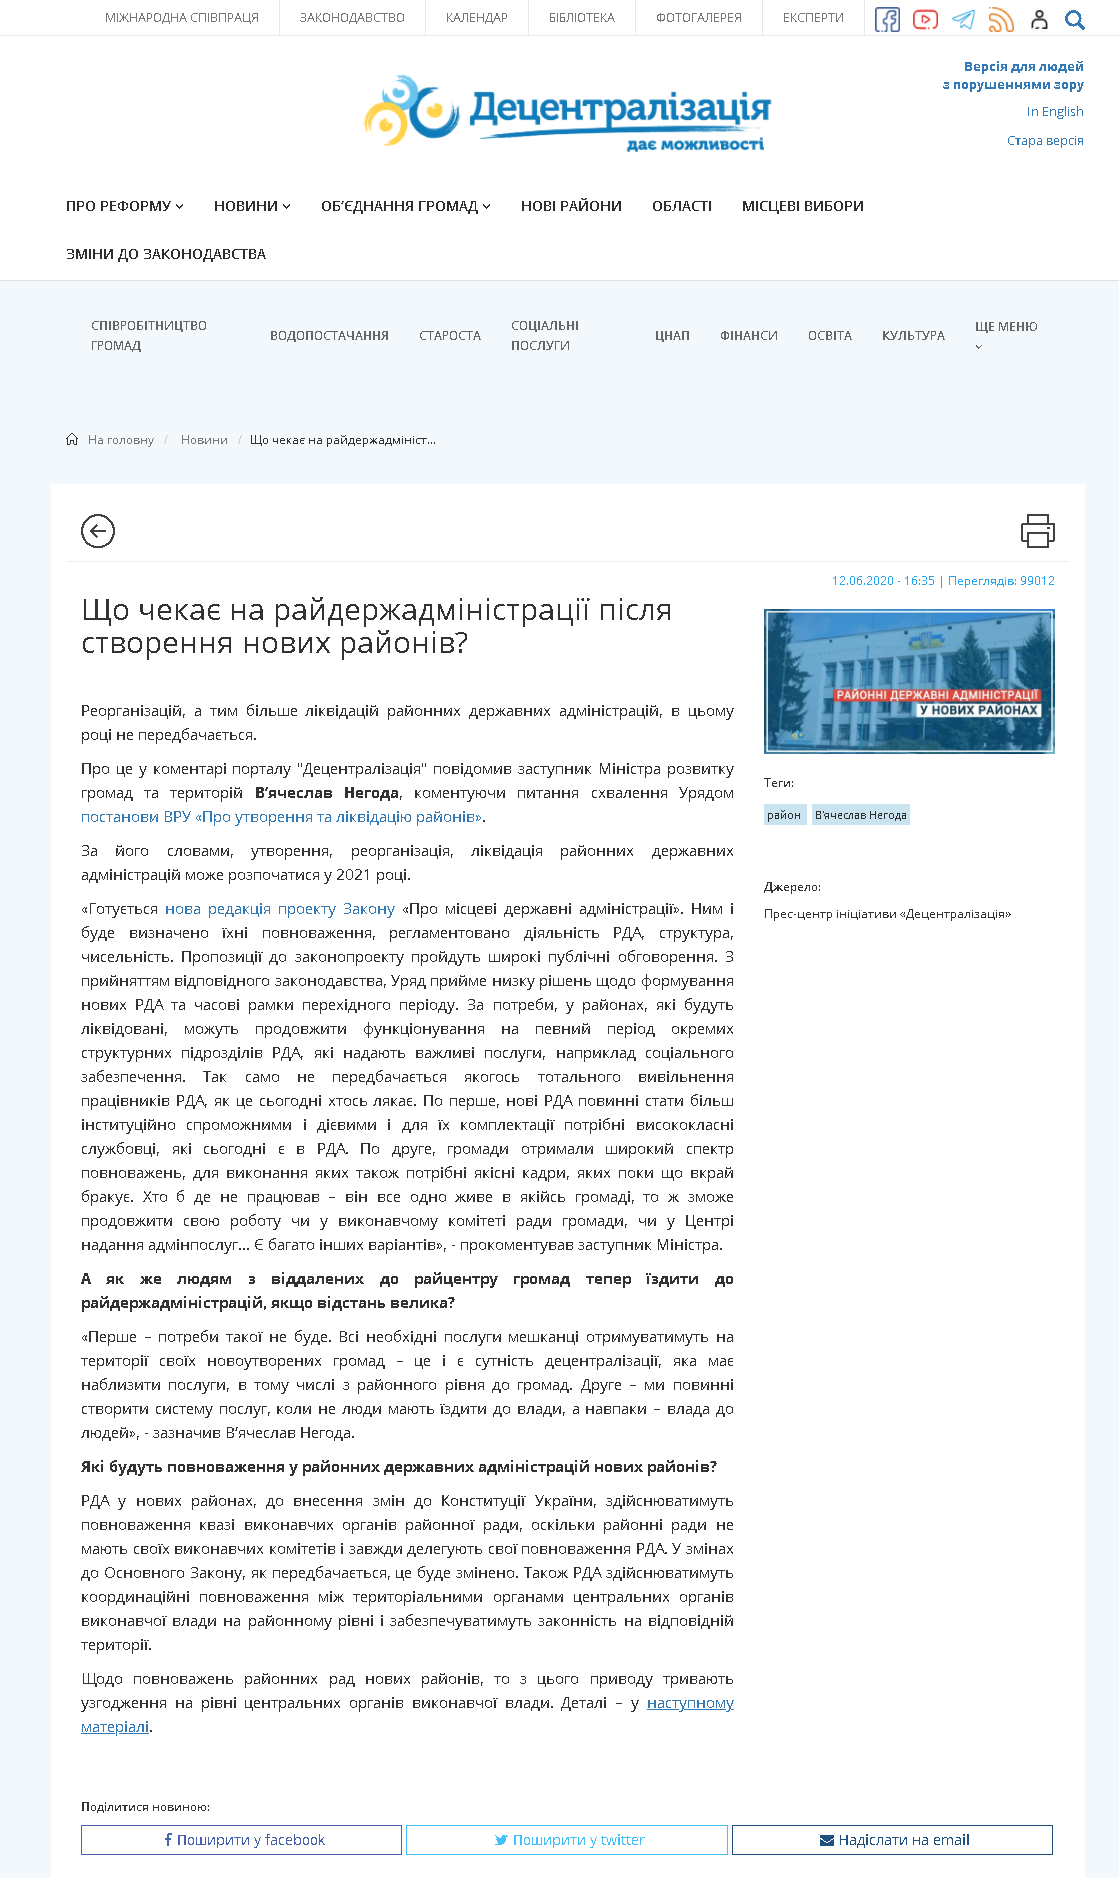 https://decentralization.gov.ua/news/12531